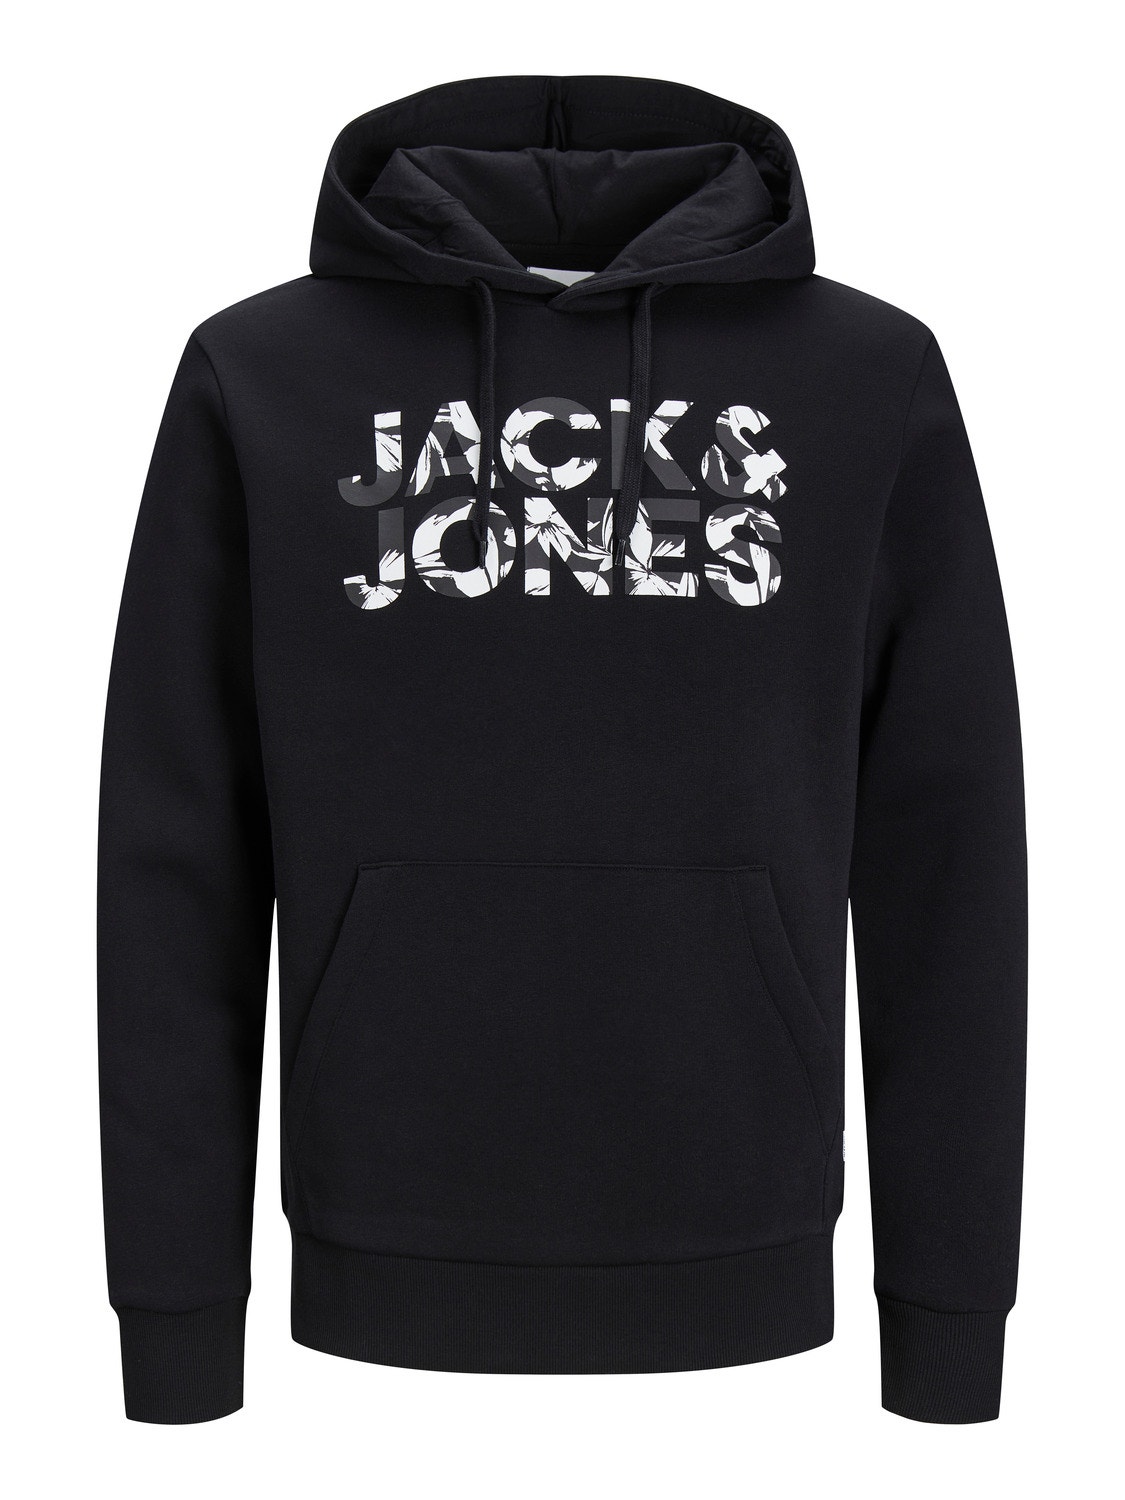 Jack & Jones Sweat à capuche Logo -Black - 12250682